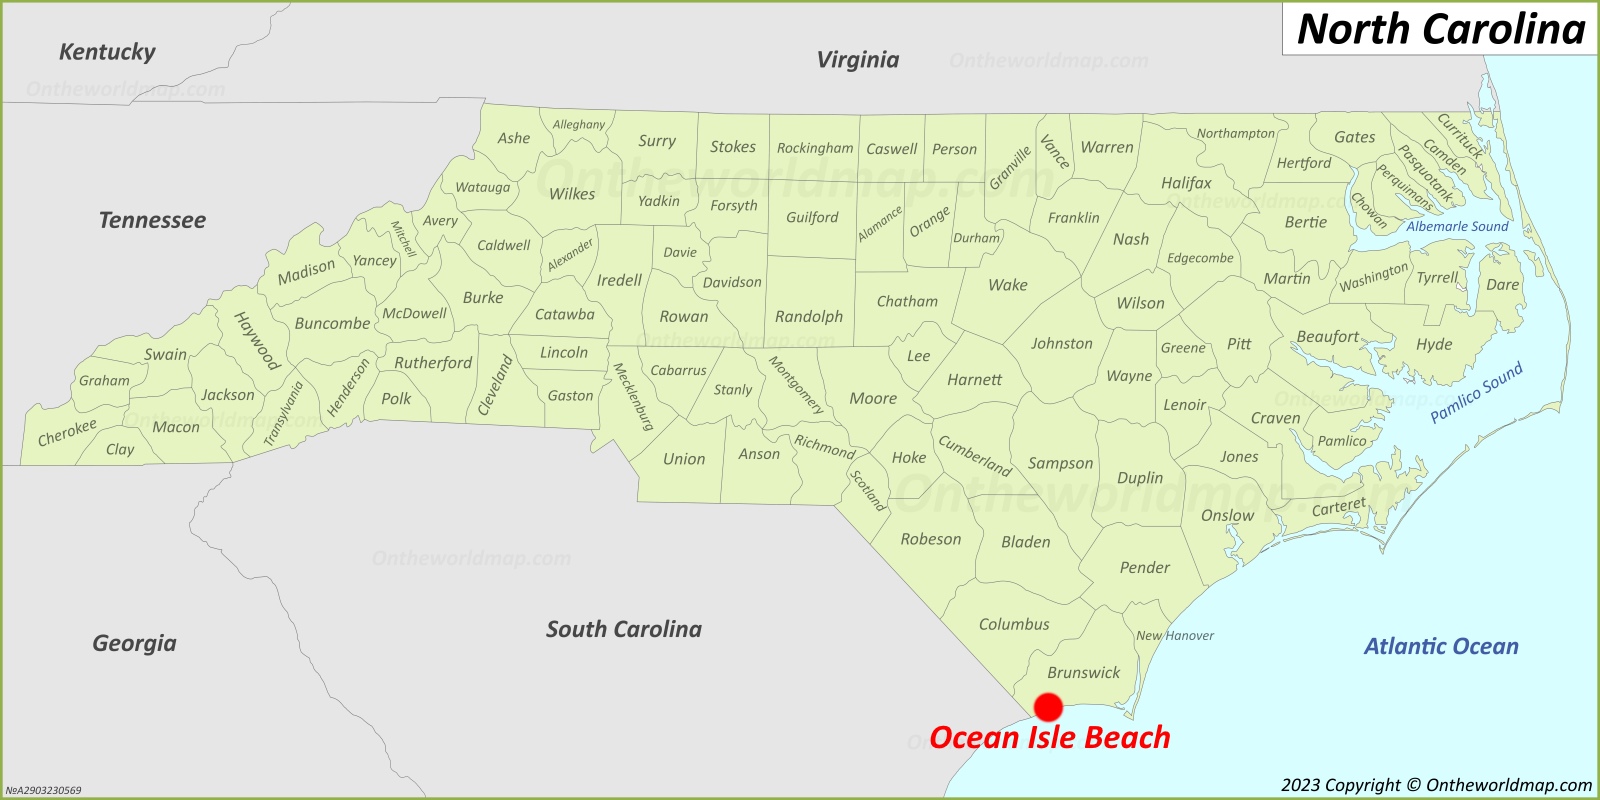 Ocean Isle Beach Location On The North Carolina Map